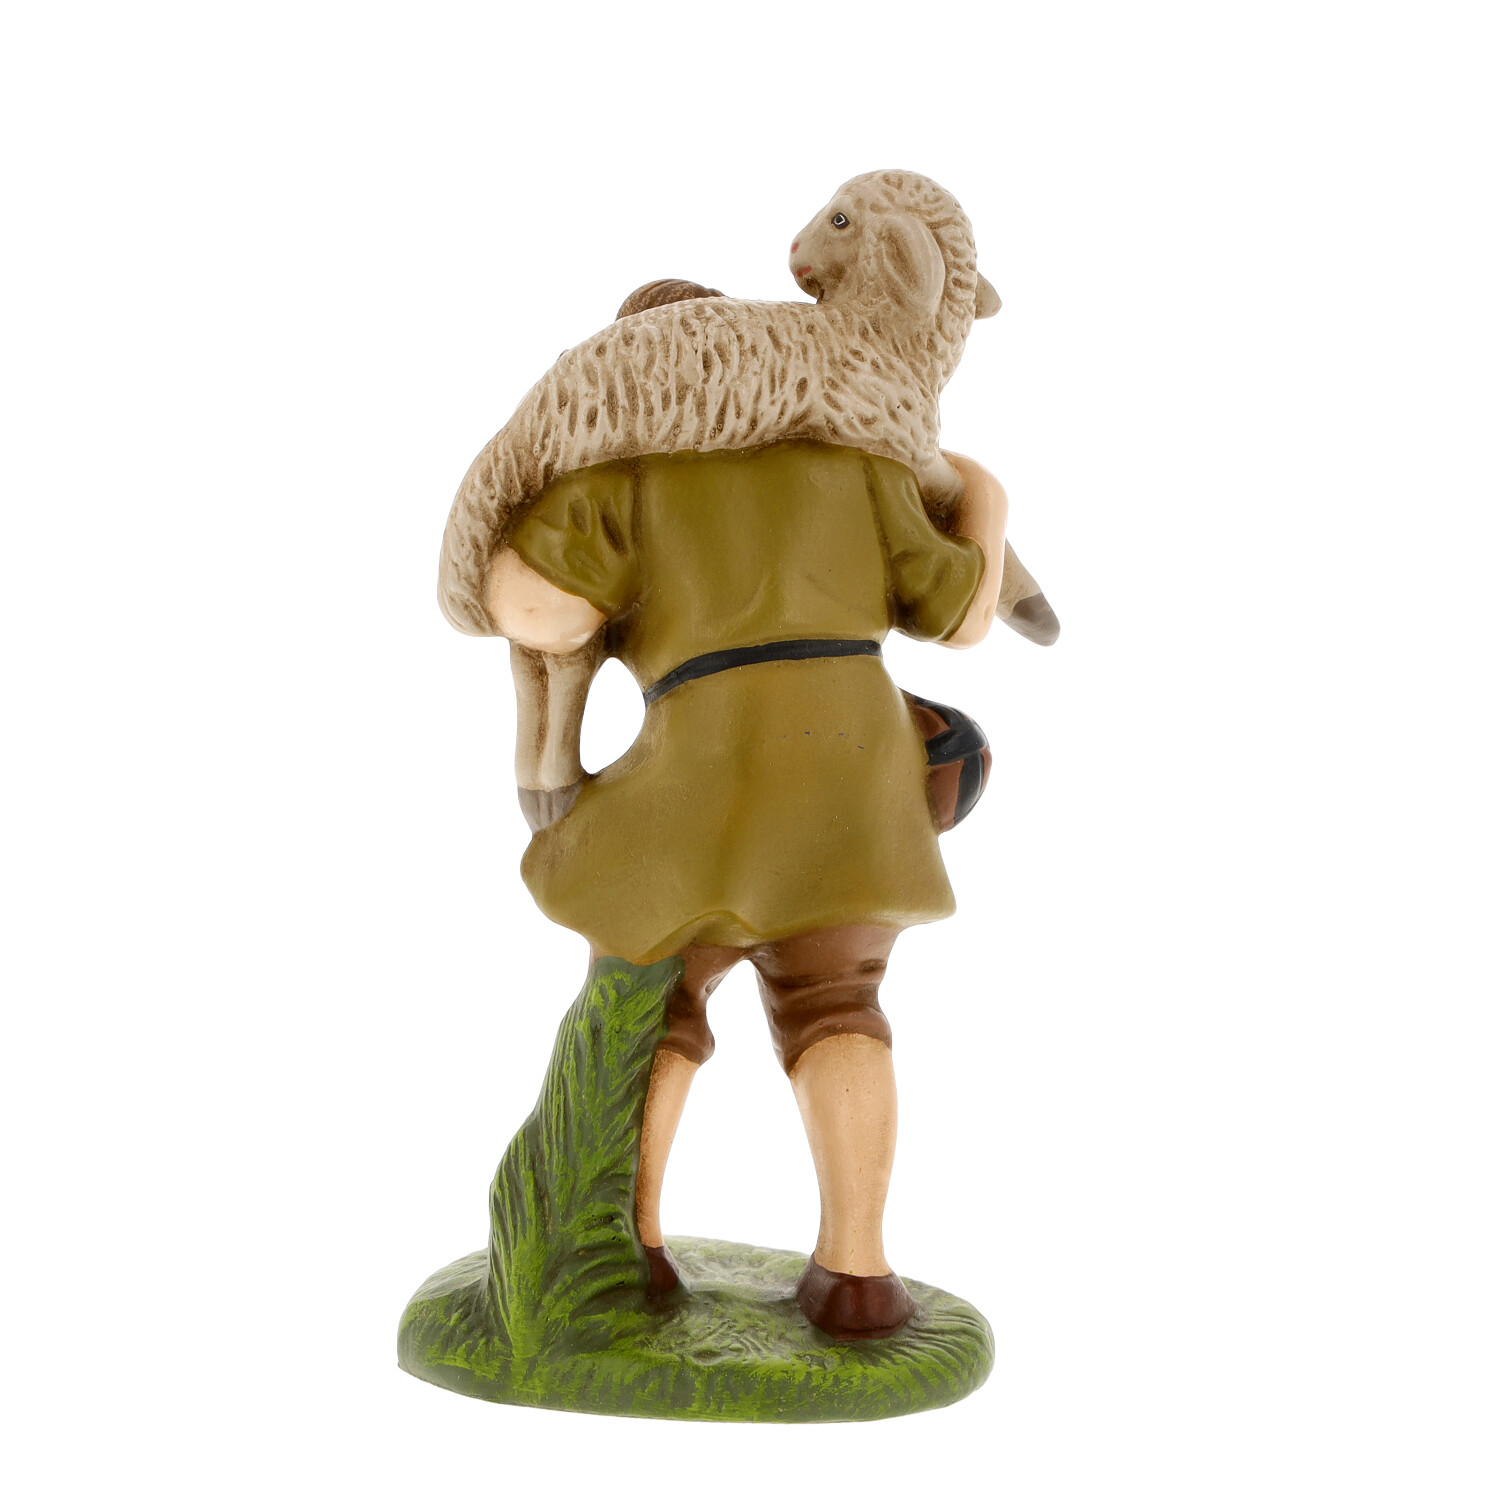 Shepherd boy with sheep - Marolin Nativity figure - made in Germany